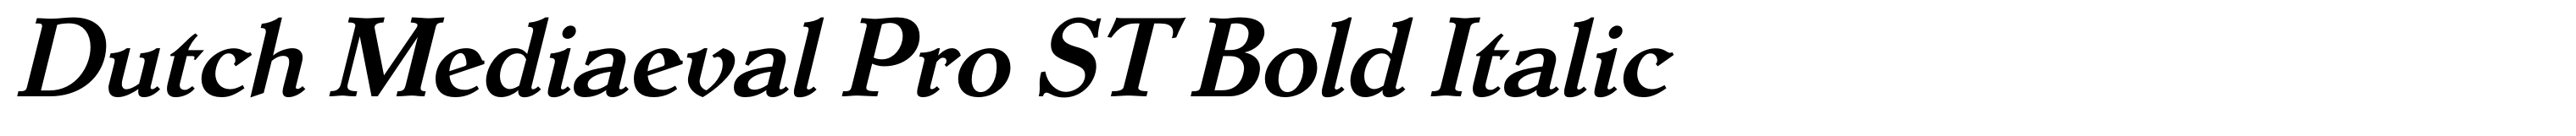 Dutch Mediaeval Pro ST Bold Italic